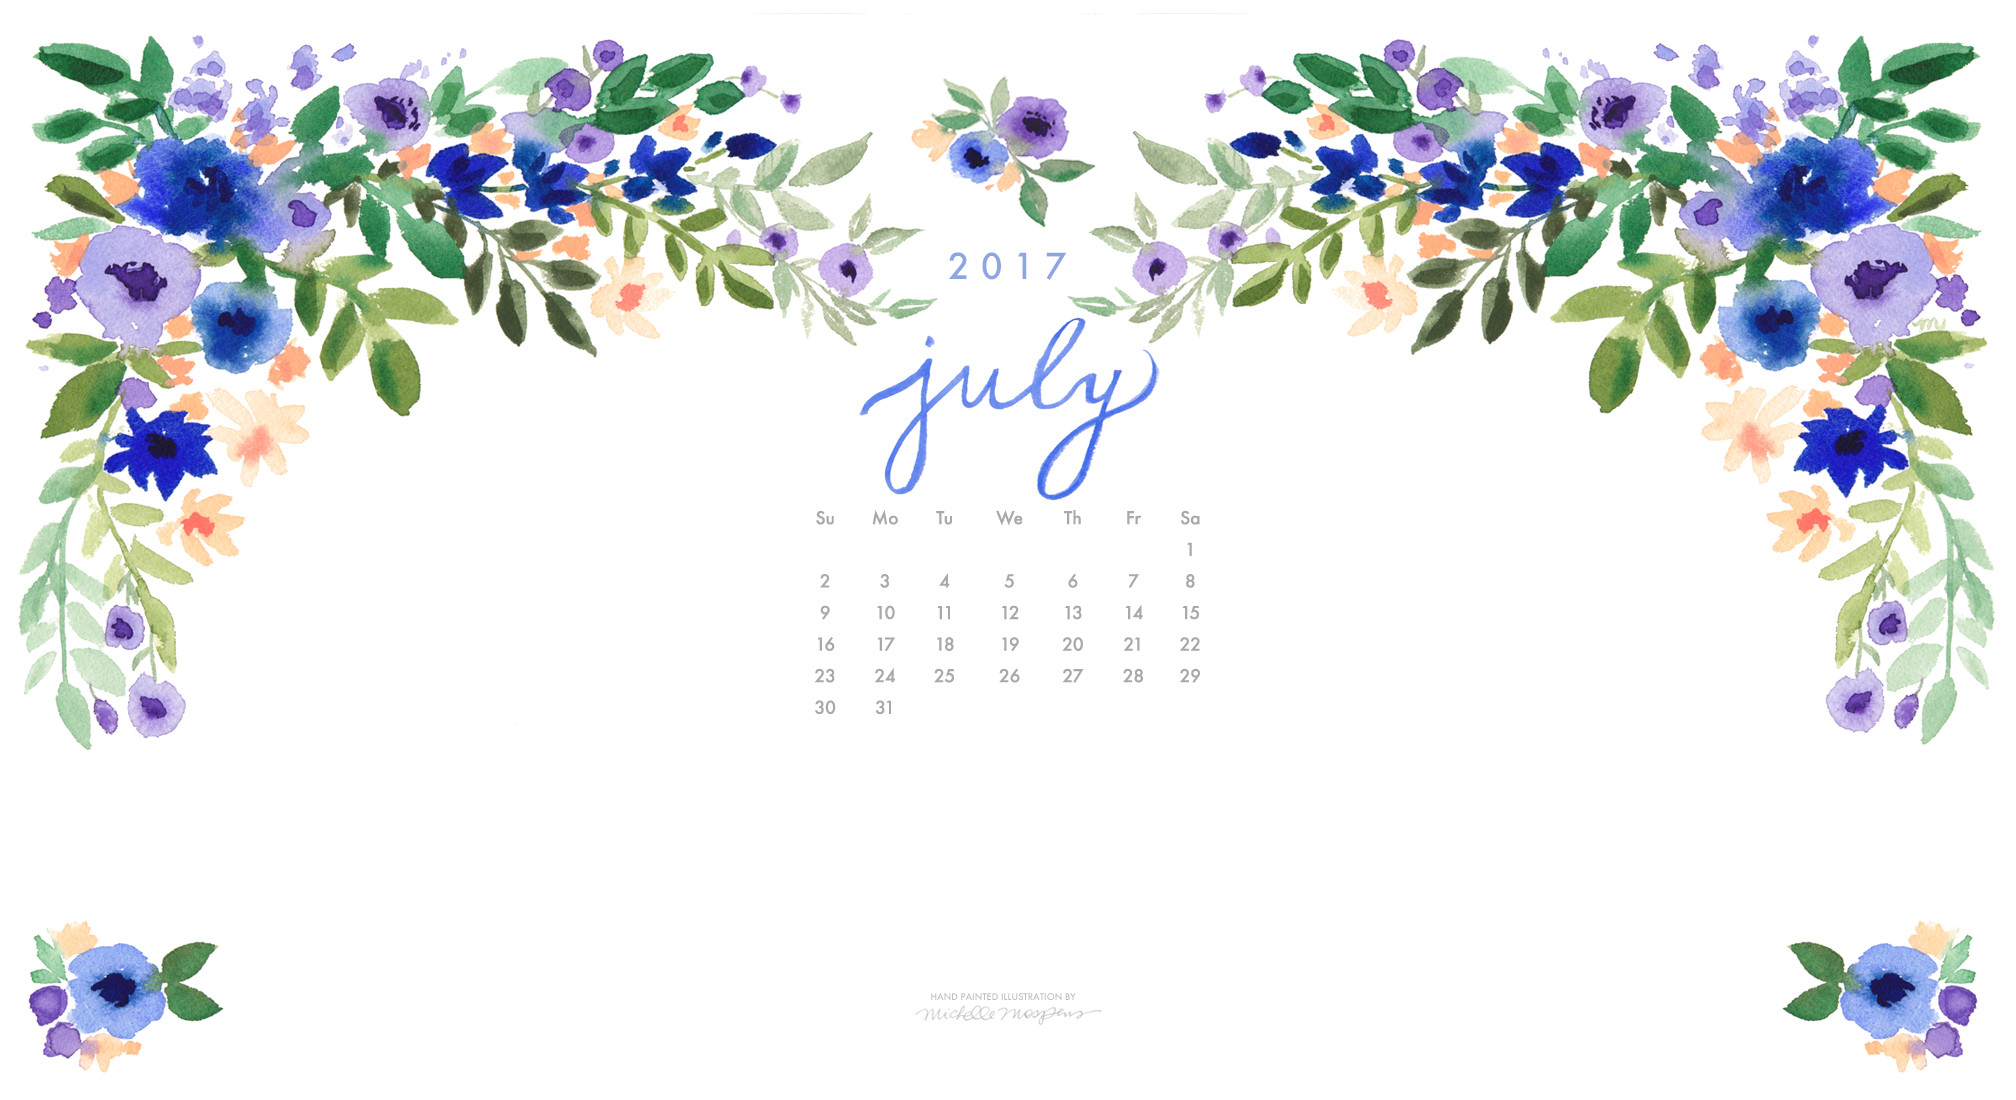 Pretty posy watercolor July 2017 calendar wallpaper for your computer. 100 original art by